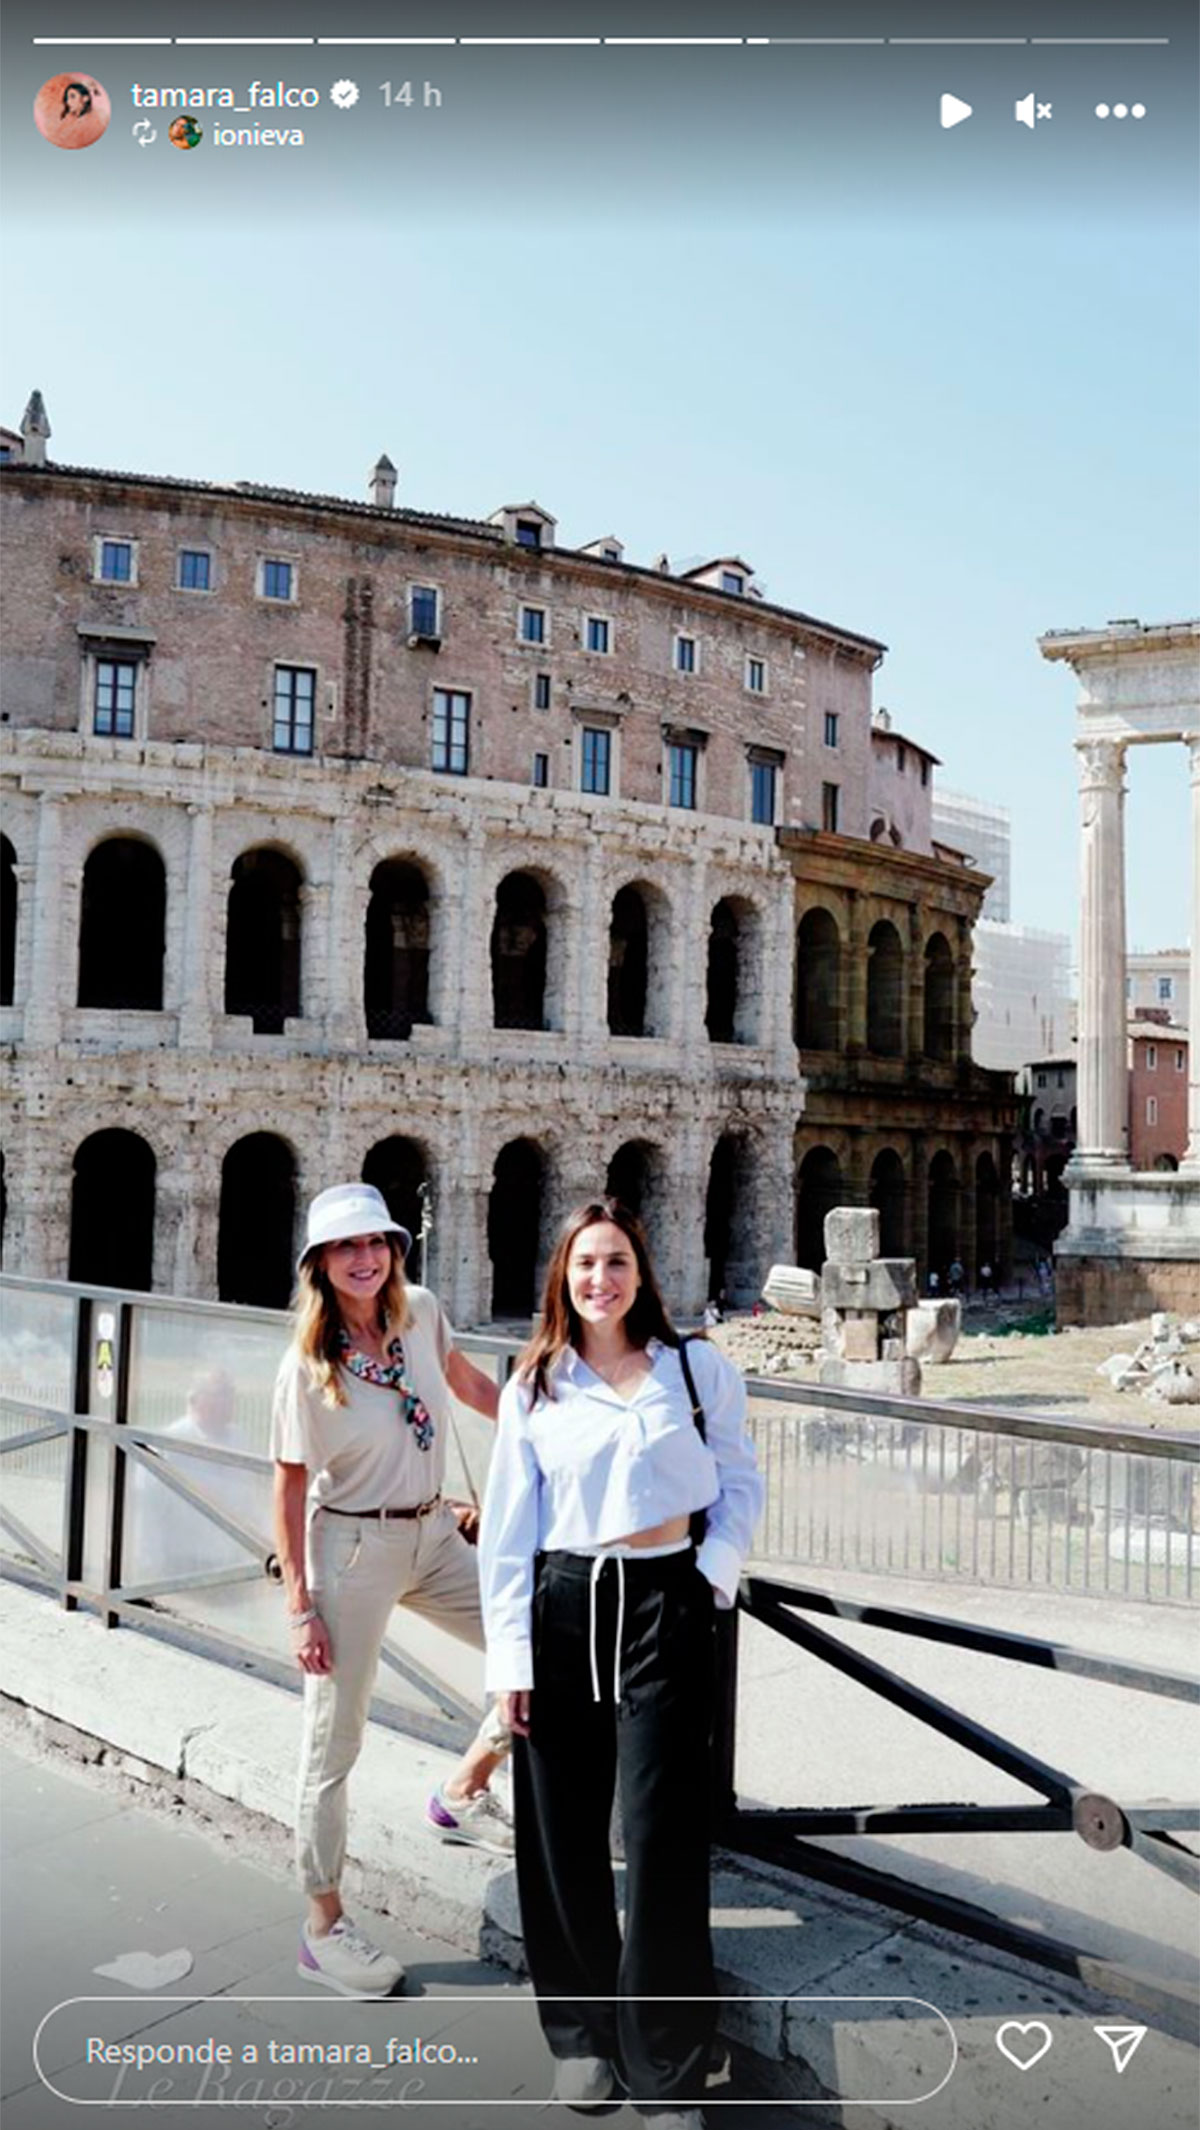 Tamara Falcó y Carolina Molas posan sonrientes en Roma